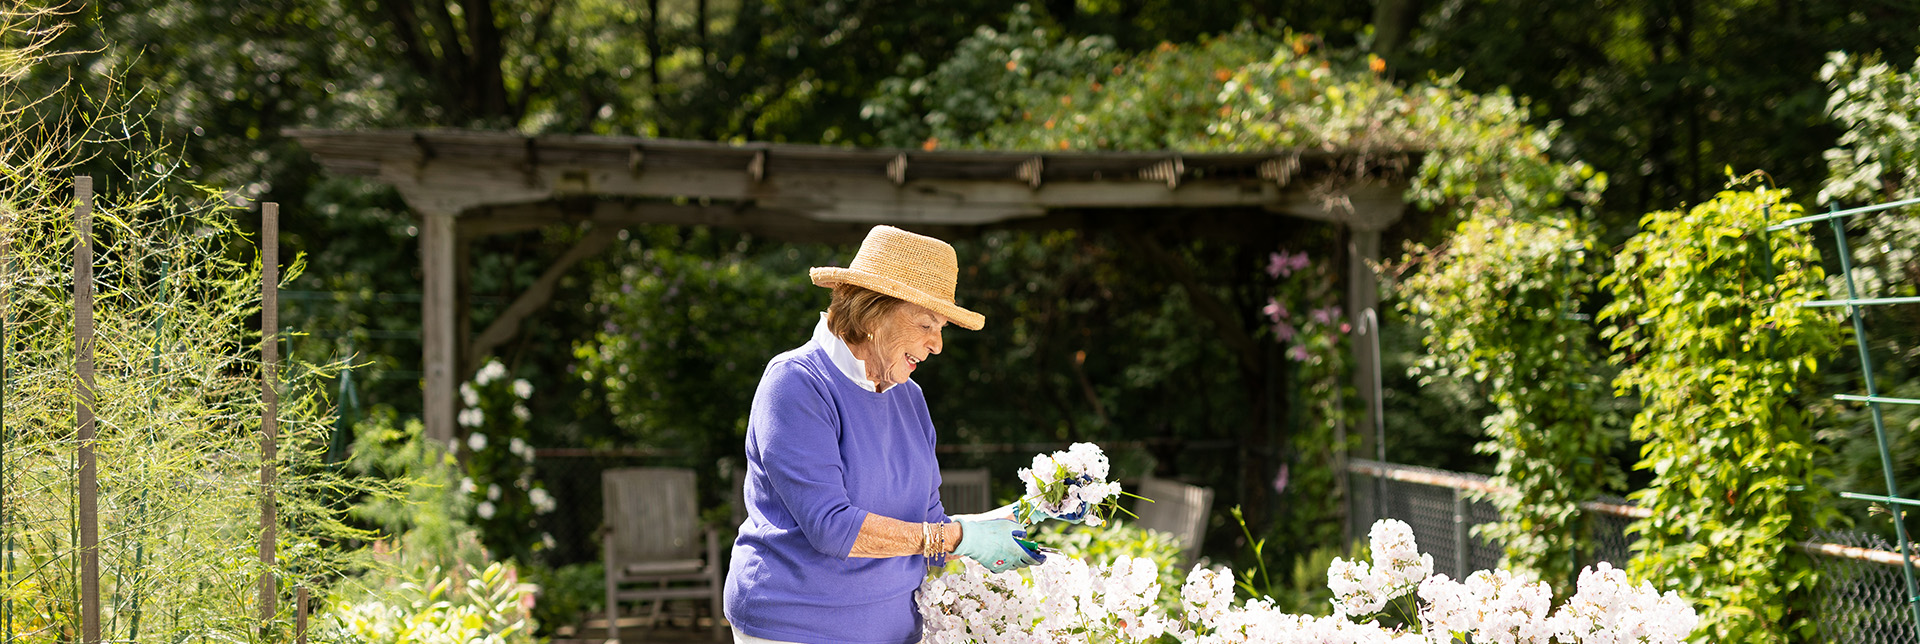 A woman working in the flower garden